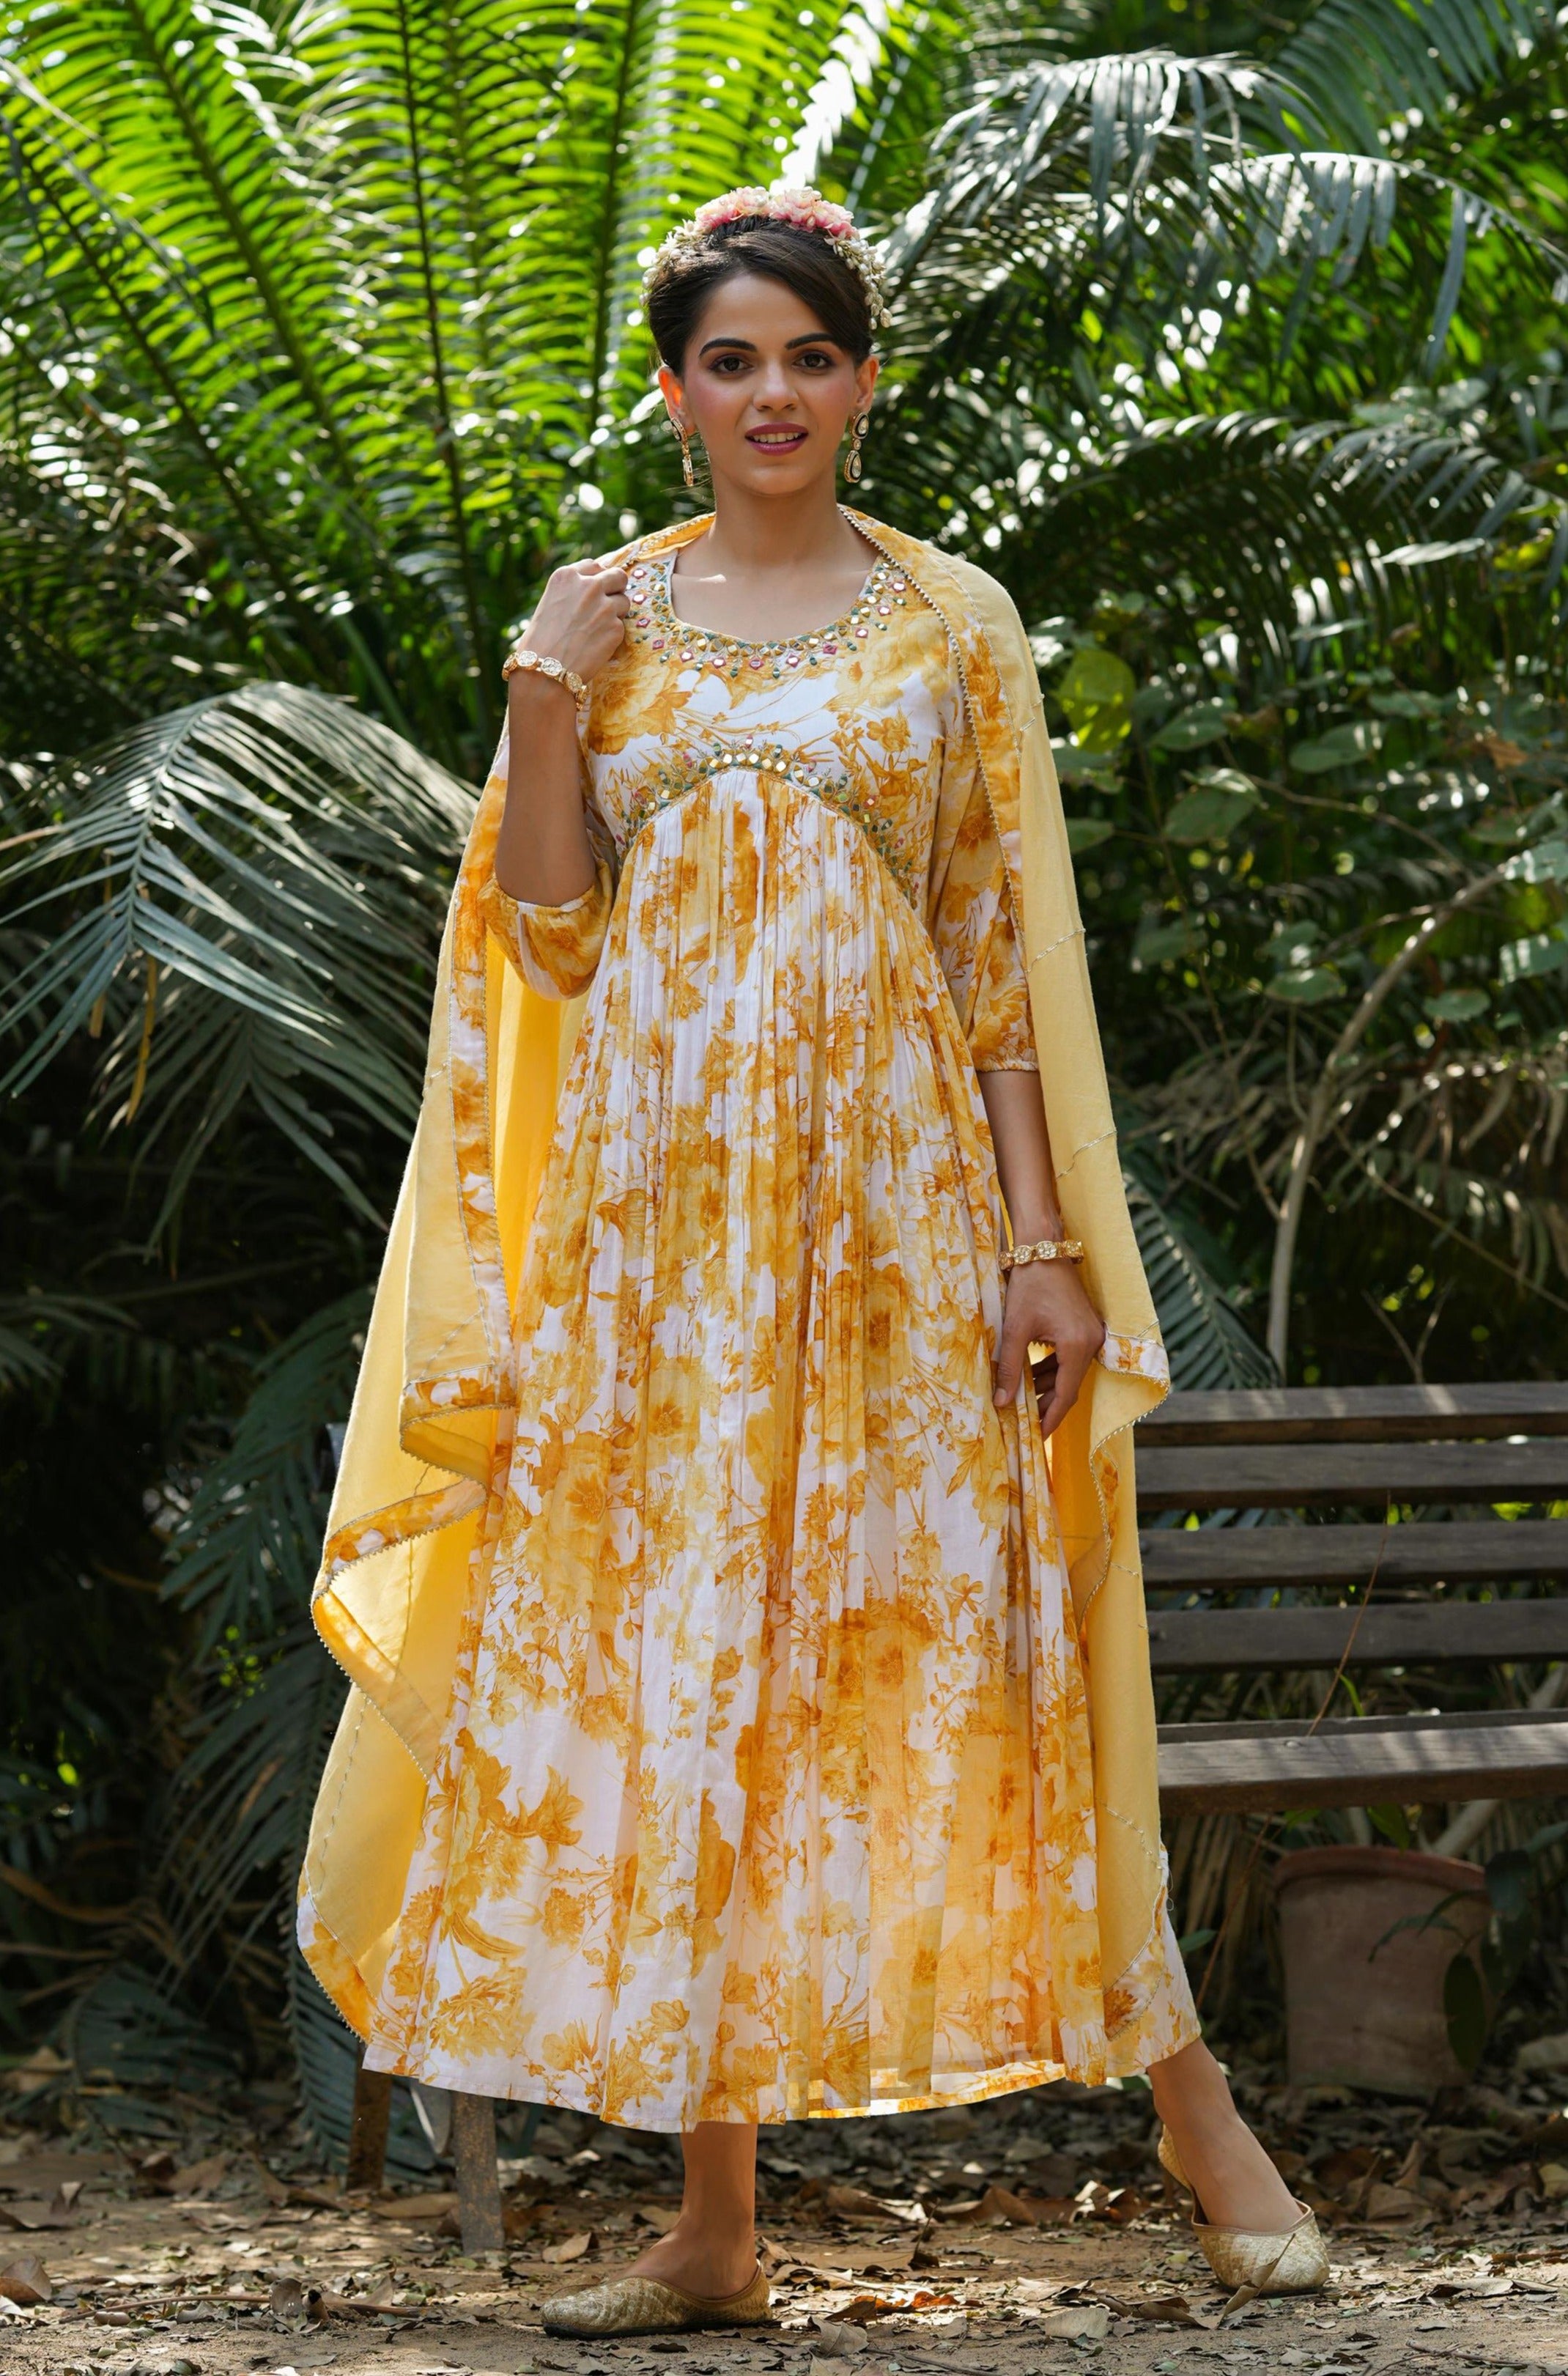 Lehenga Choli | Haldi Mehndi Dress For Bride | Freeup